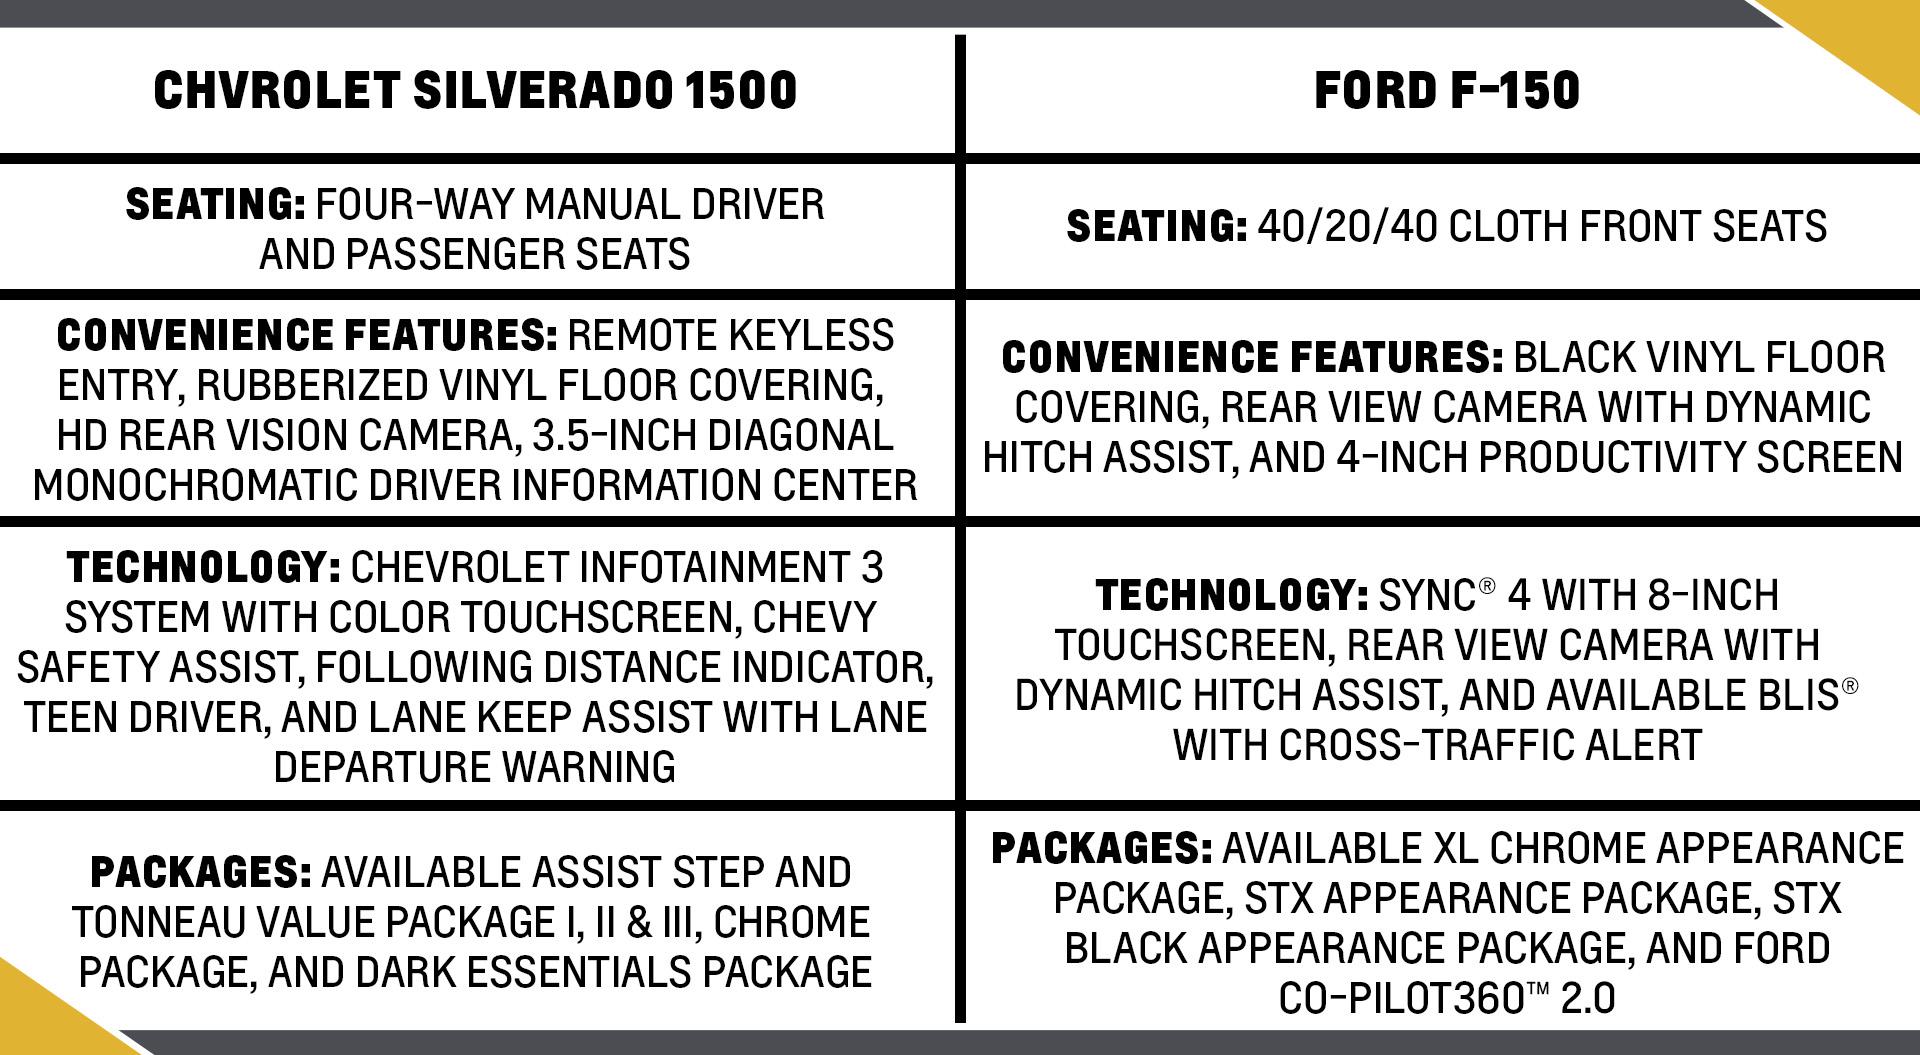 Chevy Silverado 1500 or Ford F-150